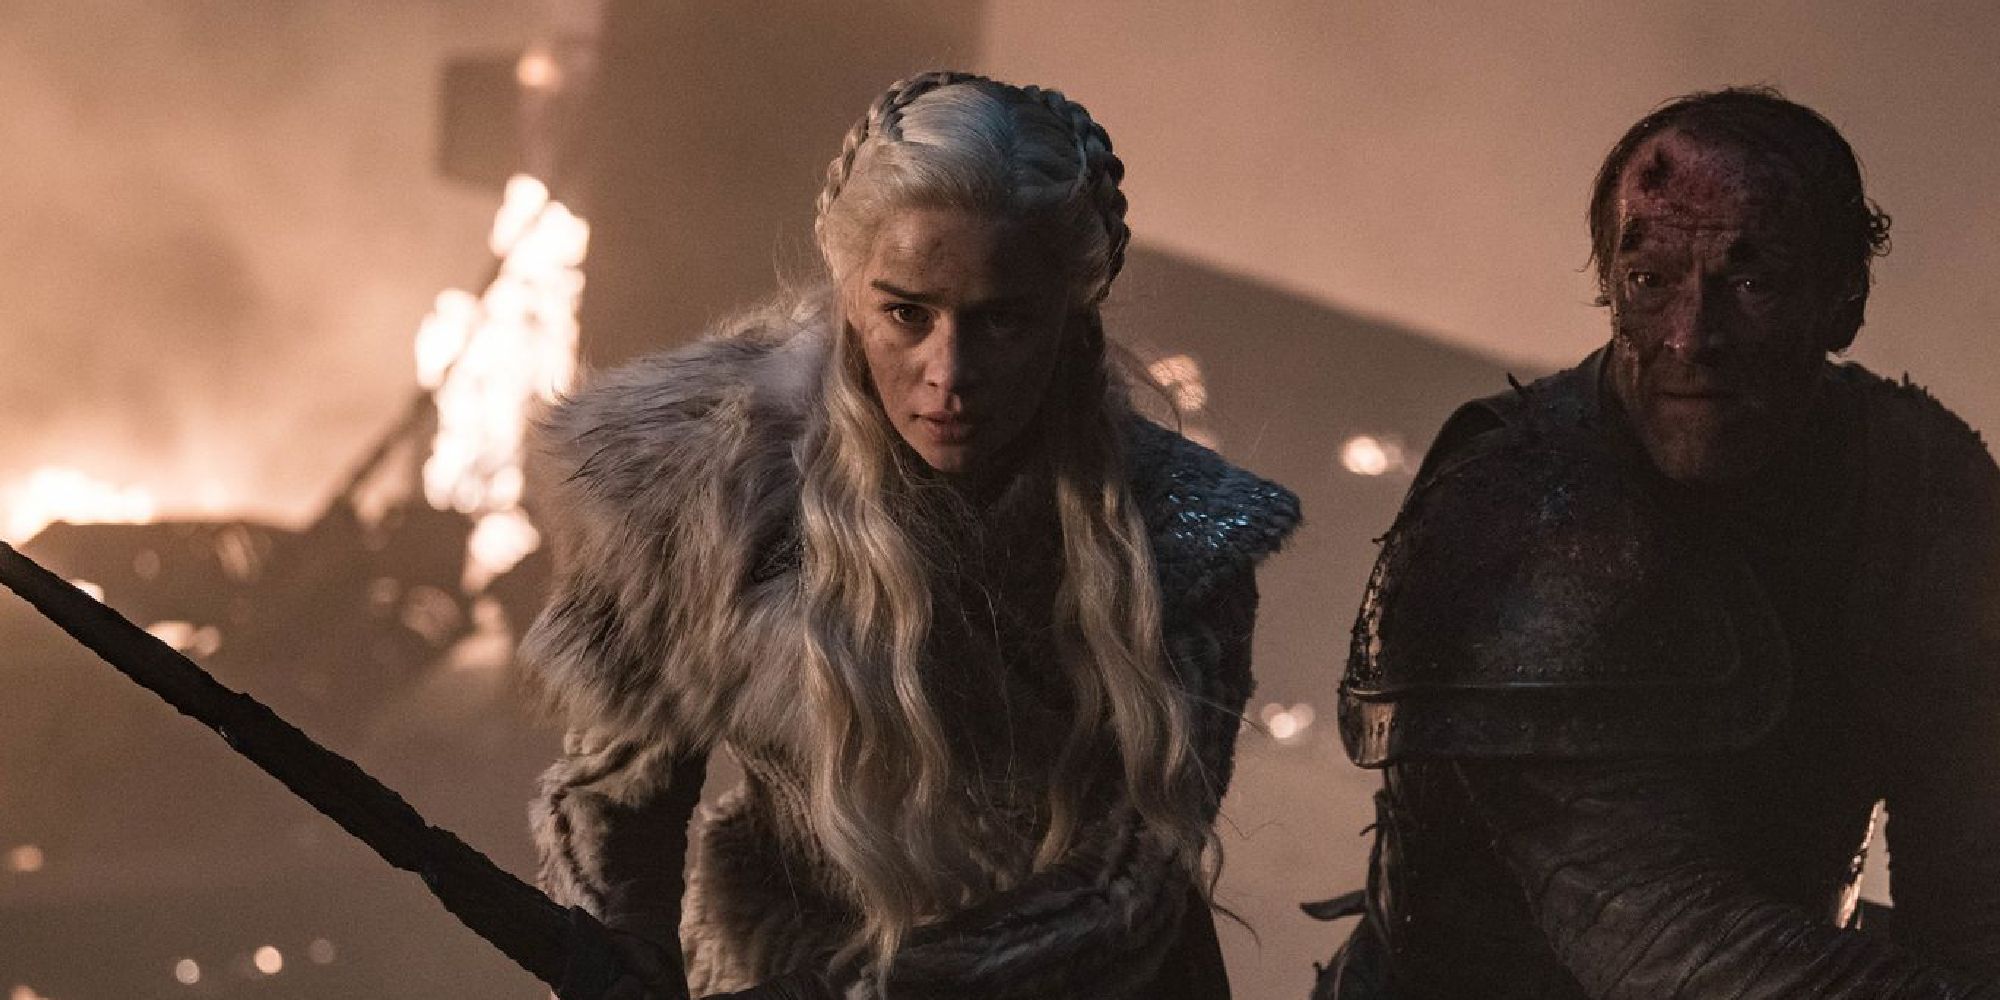 Daenerys wielding a sword to defend Jorah Mormont during the Battle of Winterfell